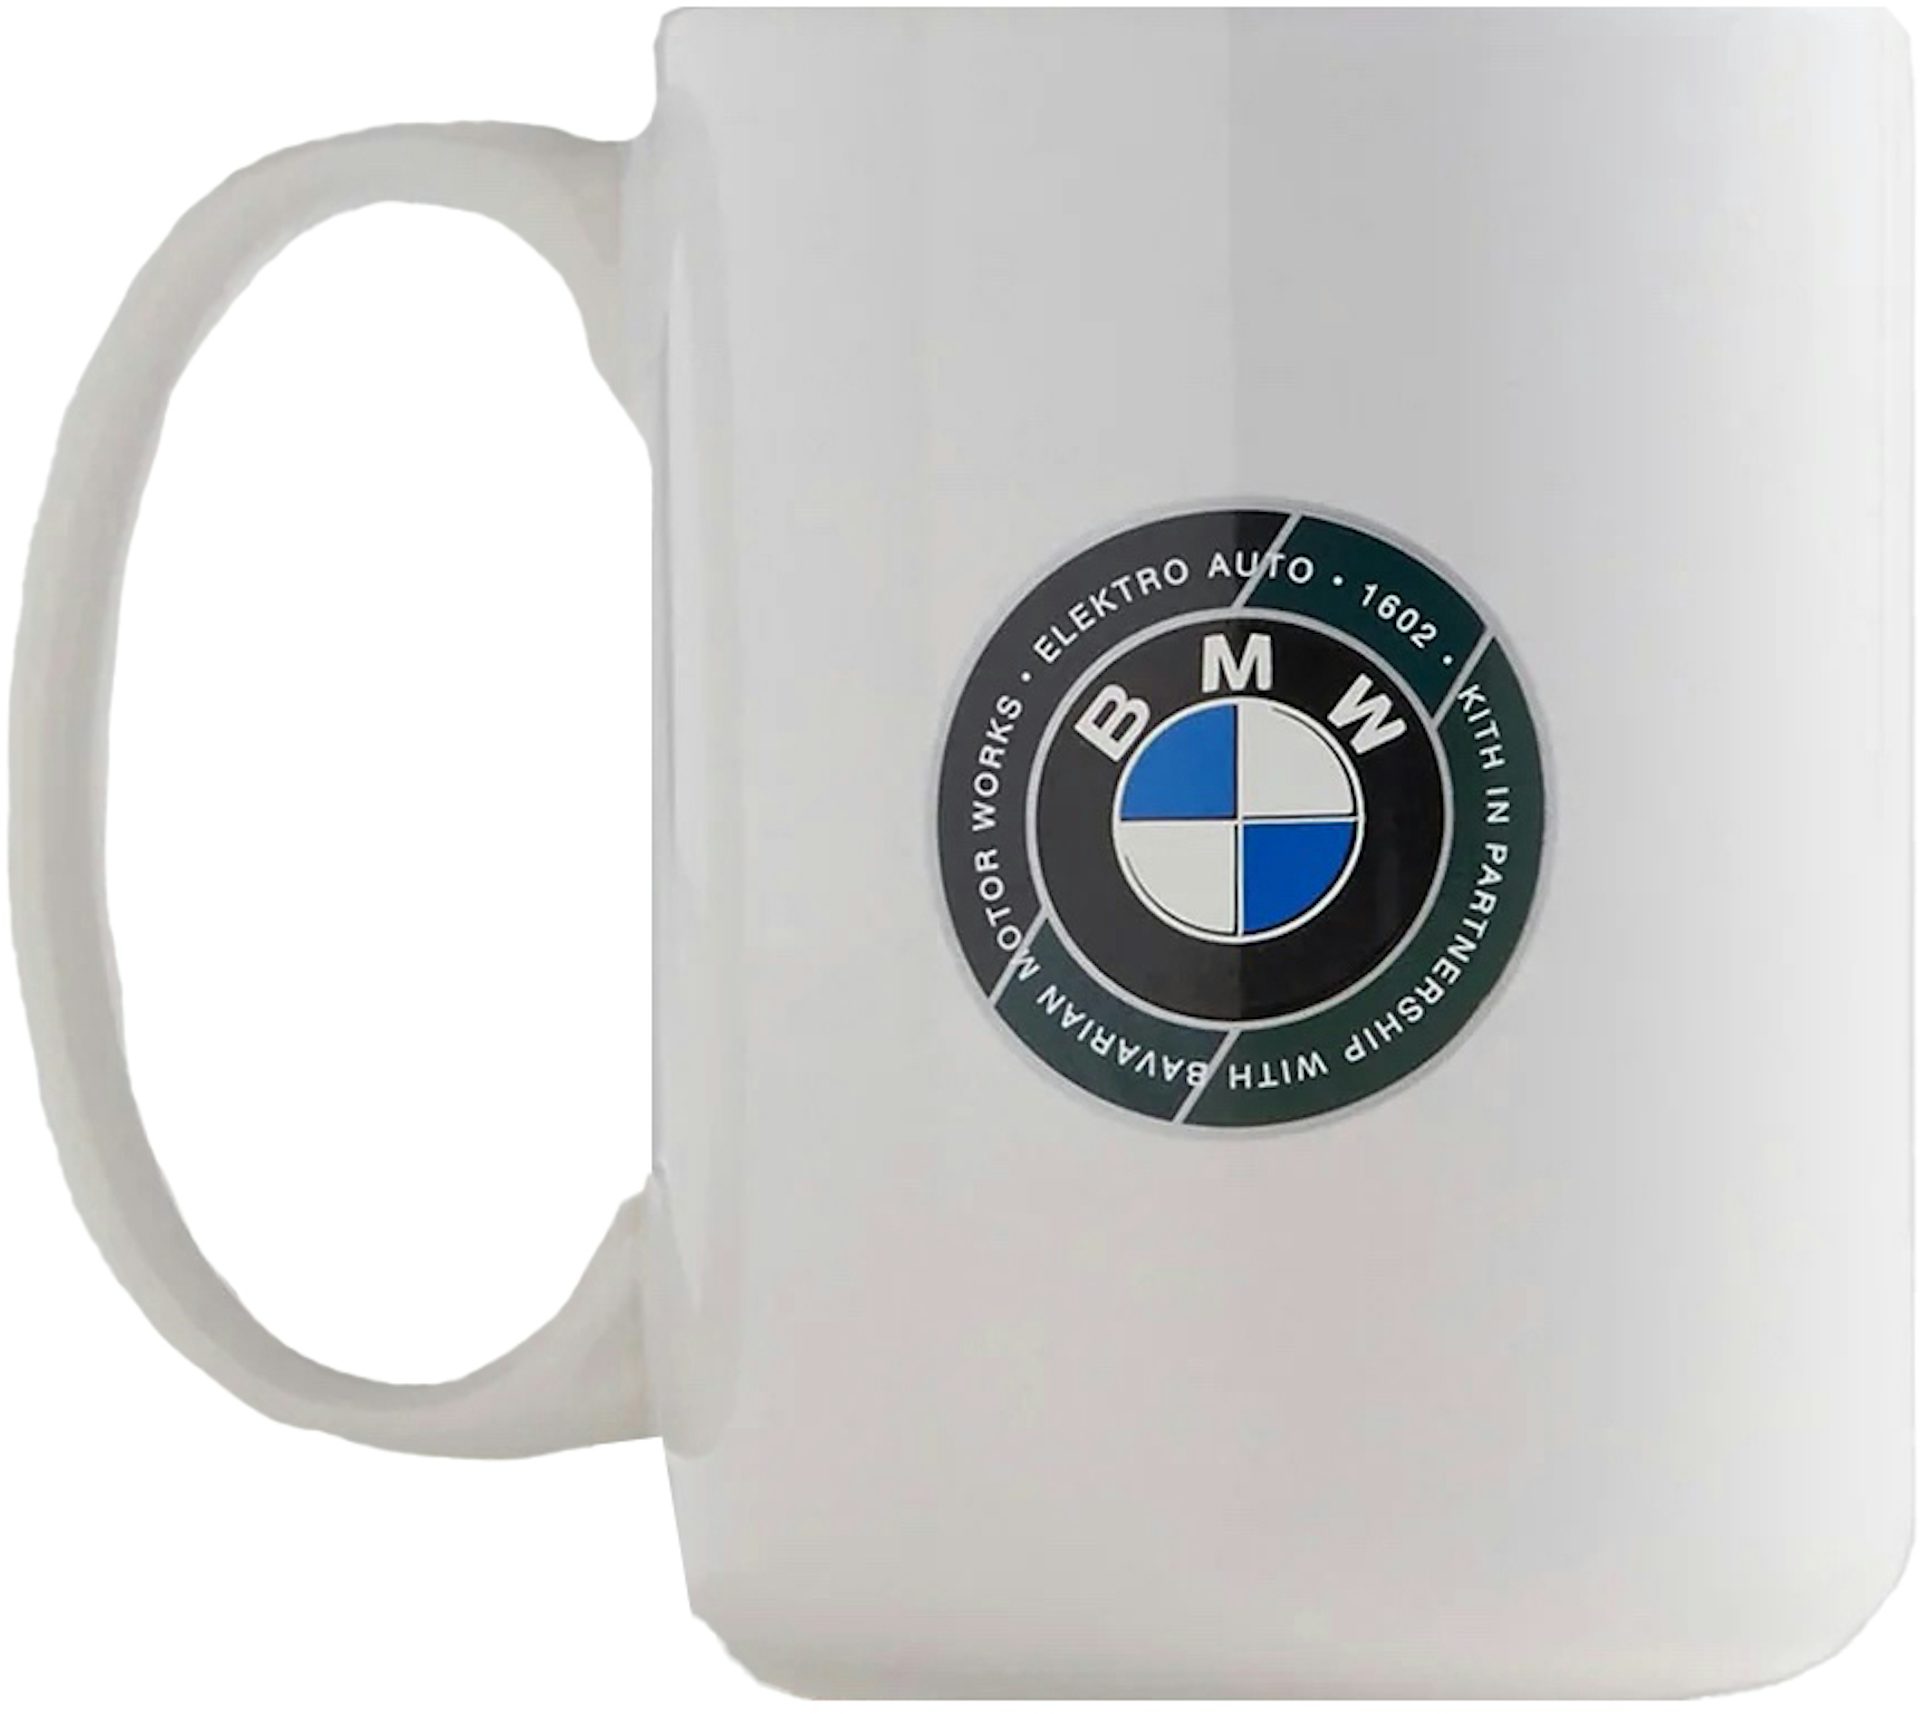 https://images.stockx.com/images/Kith-BMW-Roundel-Mug-White.jpg?fit=fill&bg=FFFFFF&w=1200&h=857&fm=jpg&auto=compress&dpr=2&trim=color&updated_at=1665157243&q=60